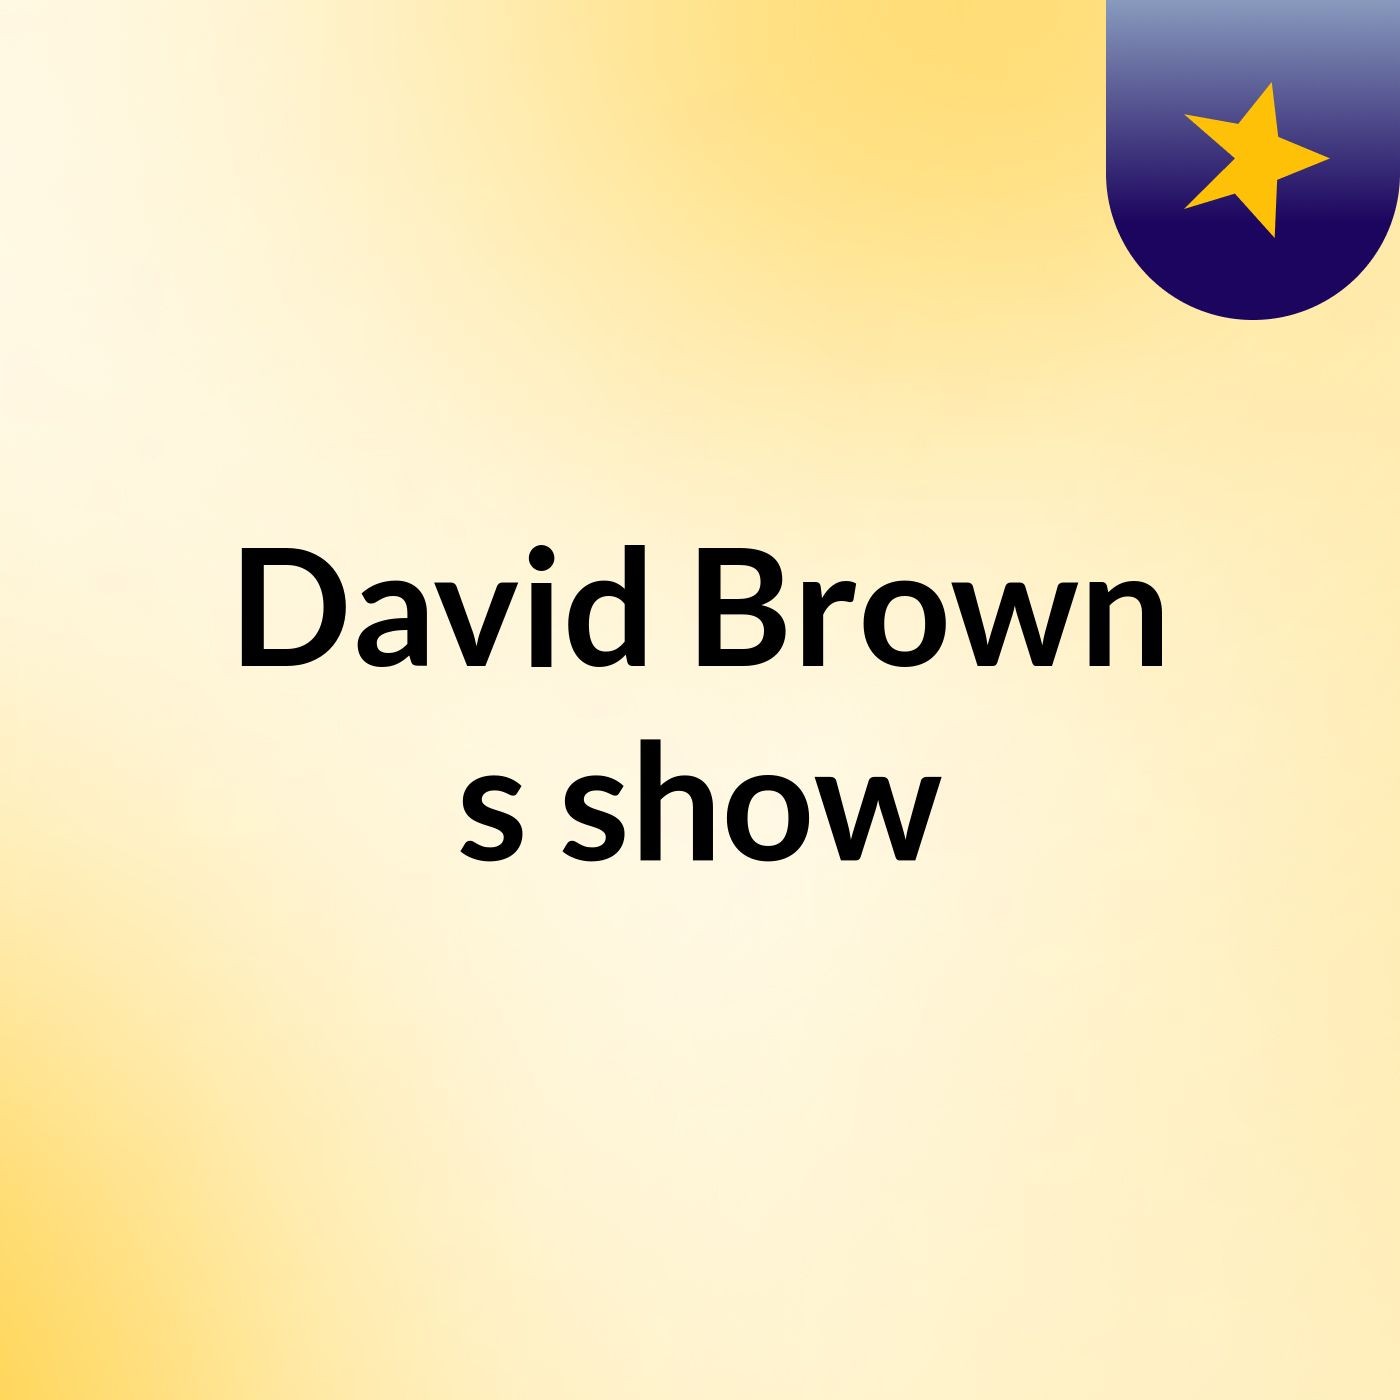 Episode 2 - David Brown's show